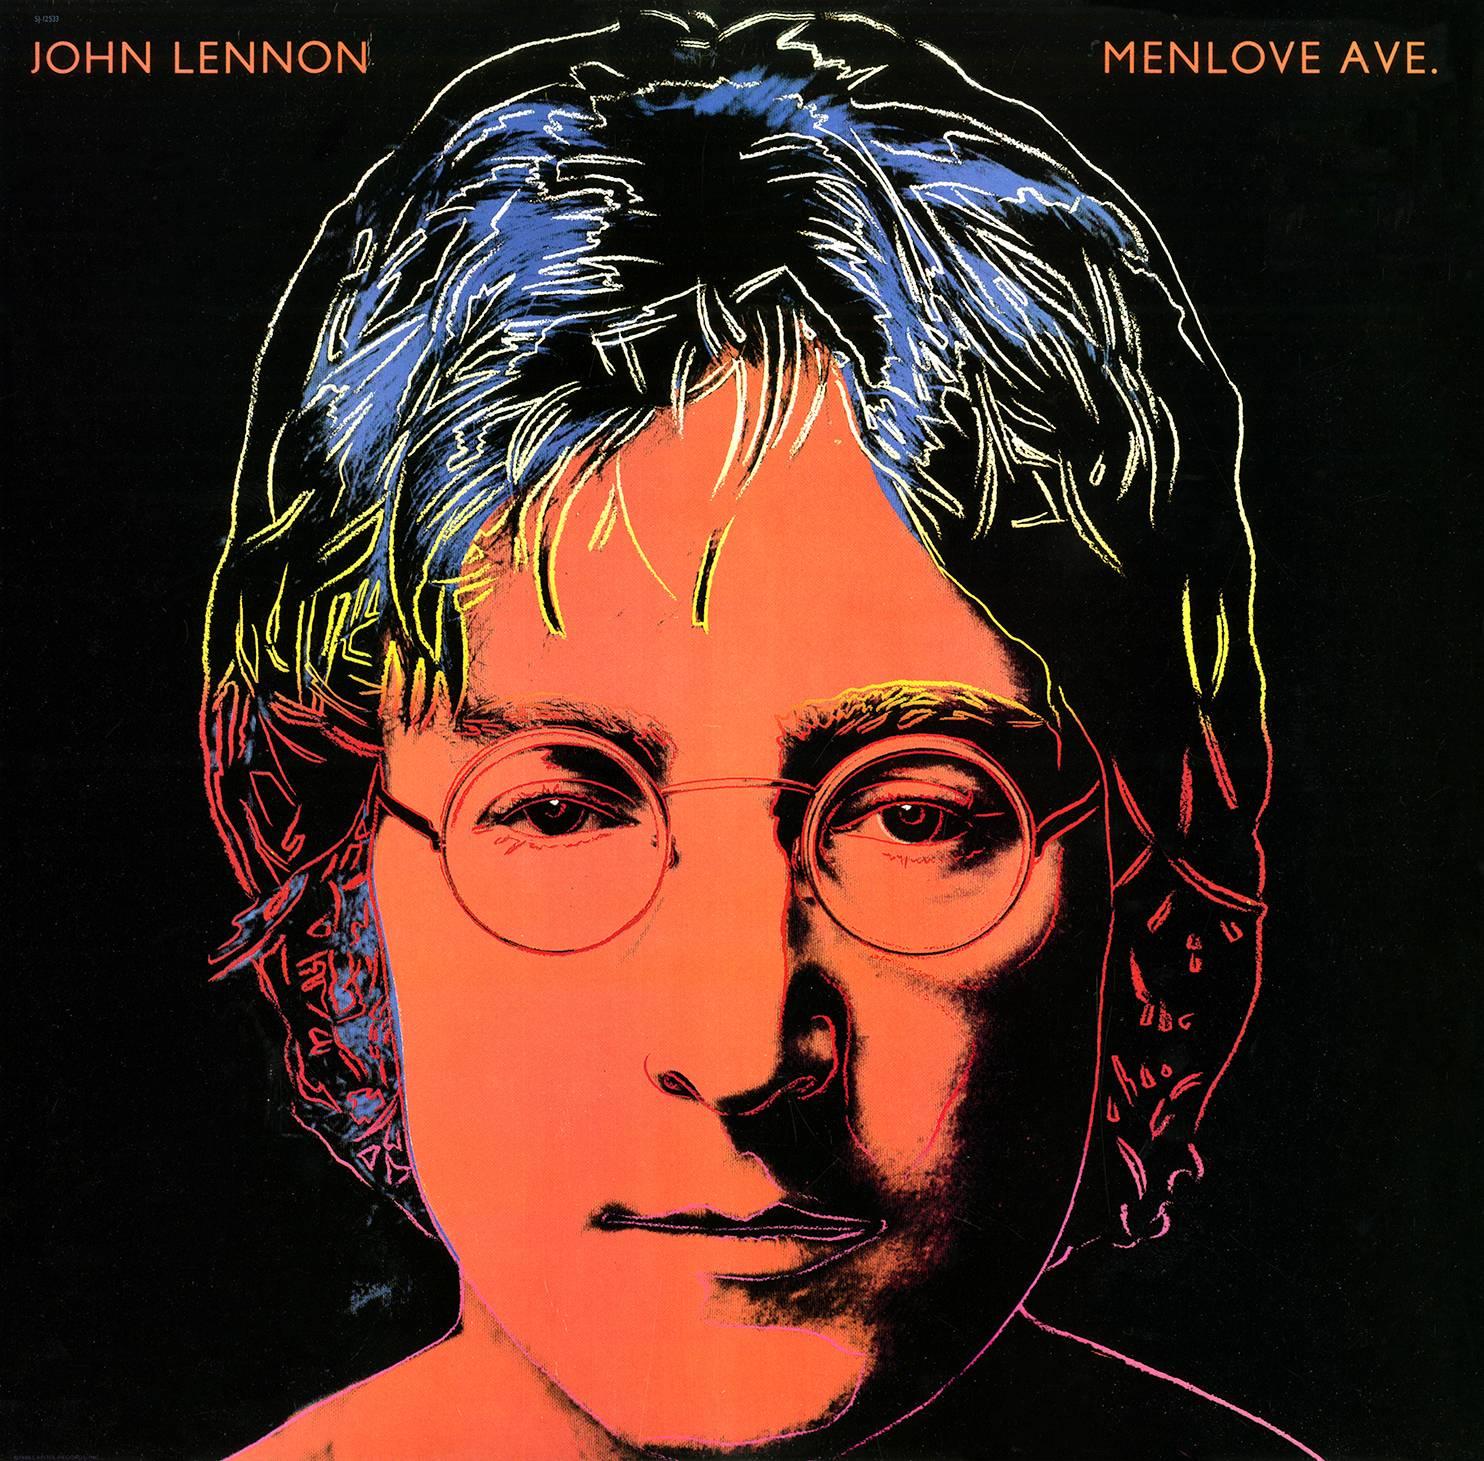 Andy Warhol Print - John Lennon Vinyl Record Art